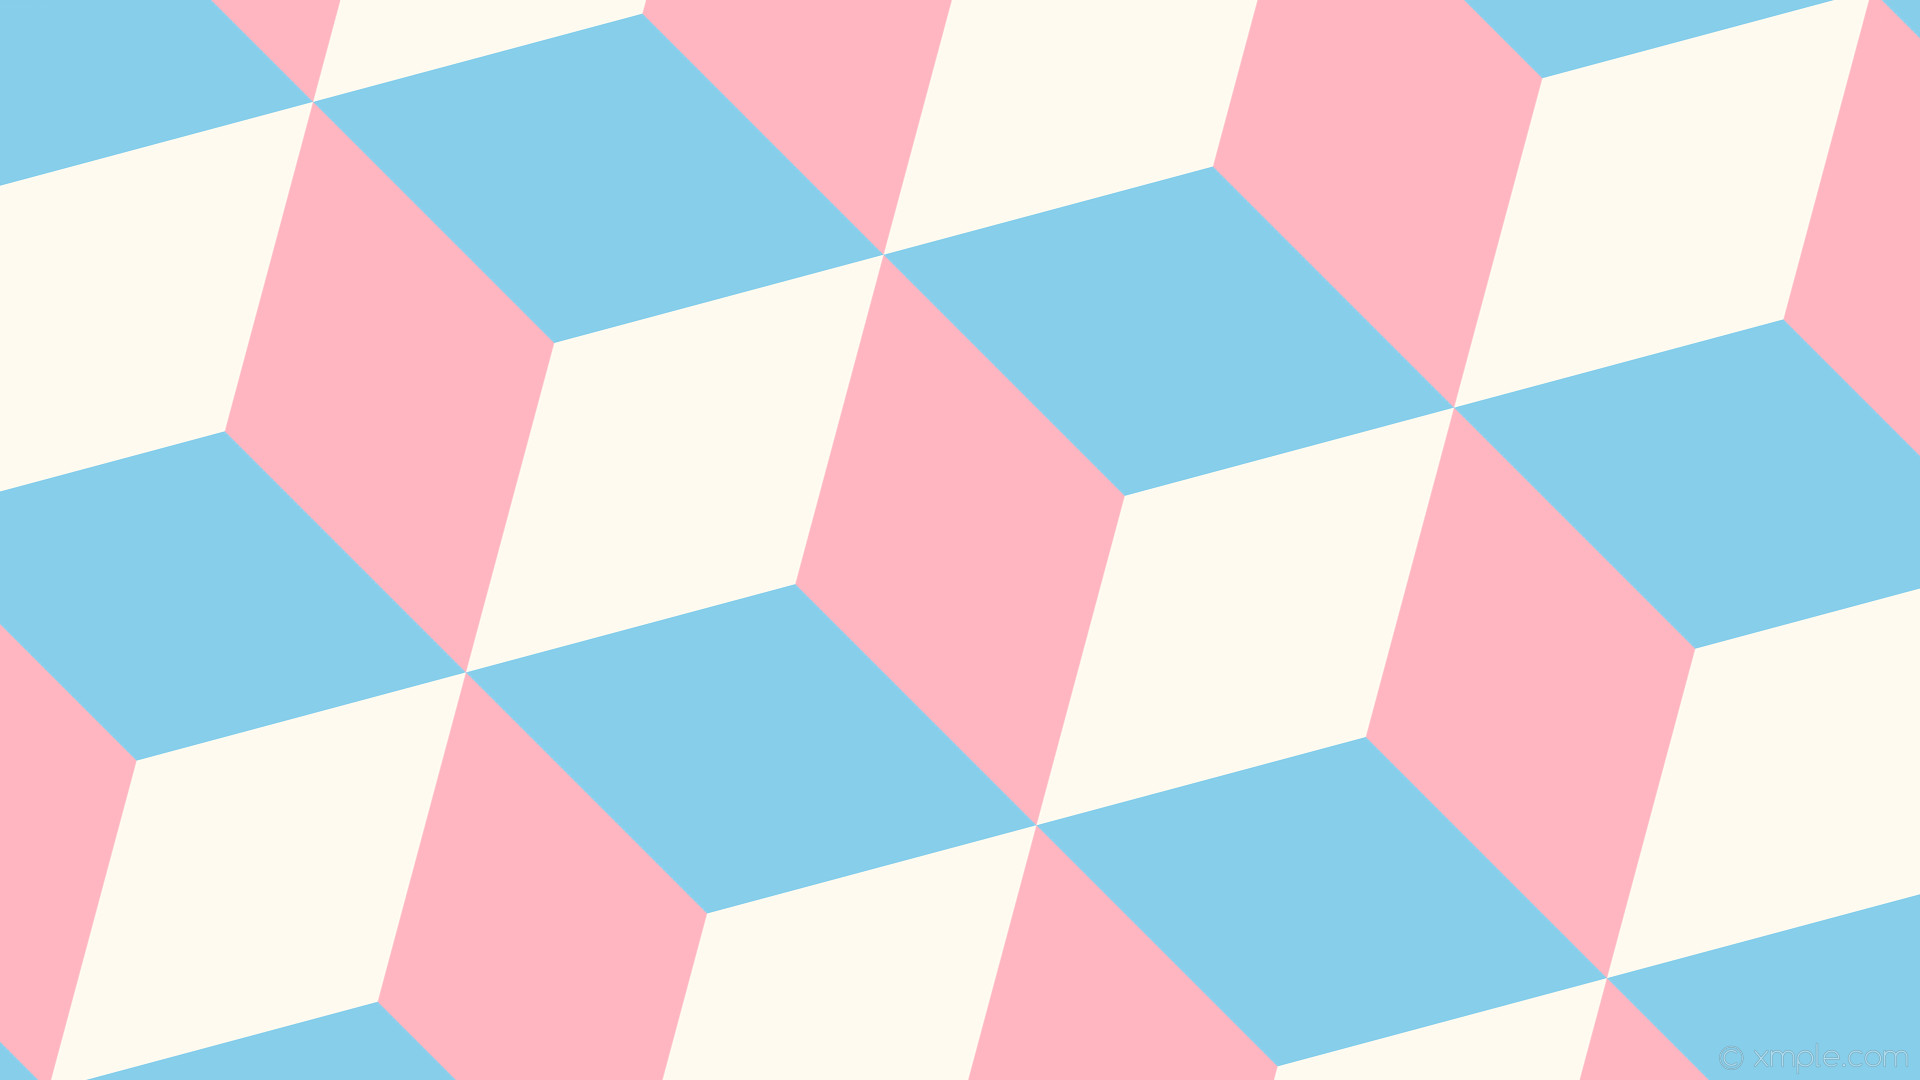 1920x1080 wallpaper 3d cubes white blue pink light pink floral white sky blue #ffb6c1  #fffaf0